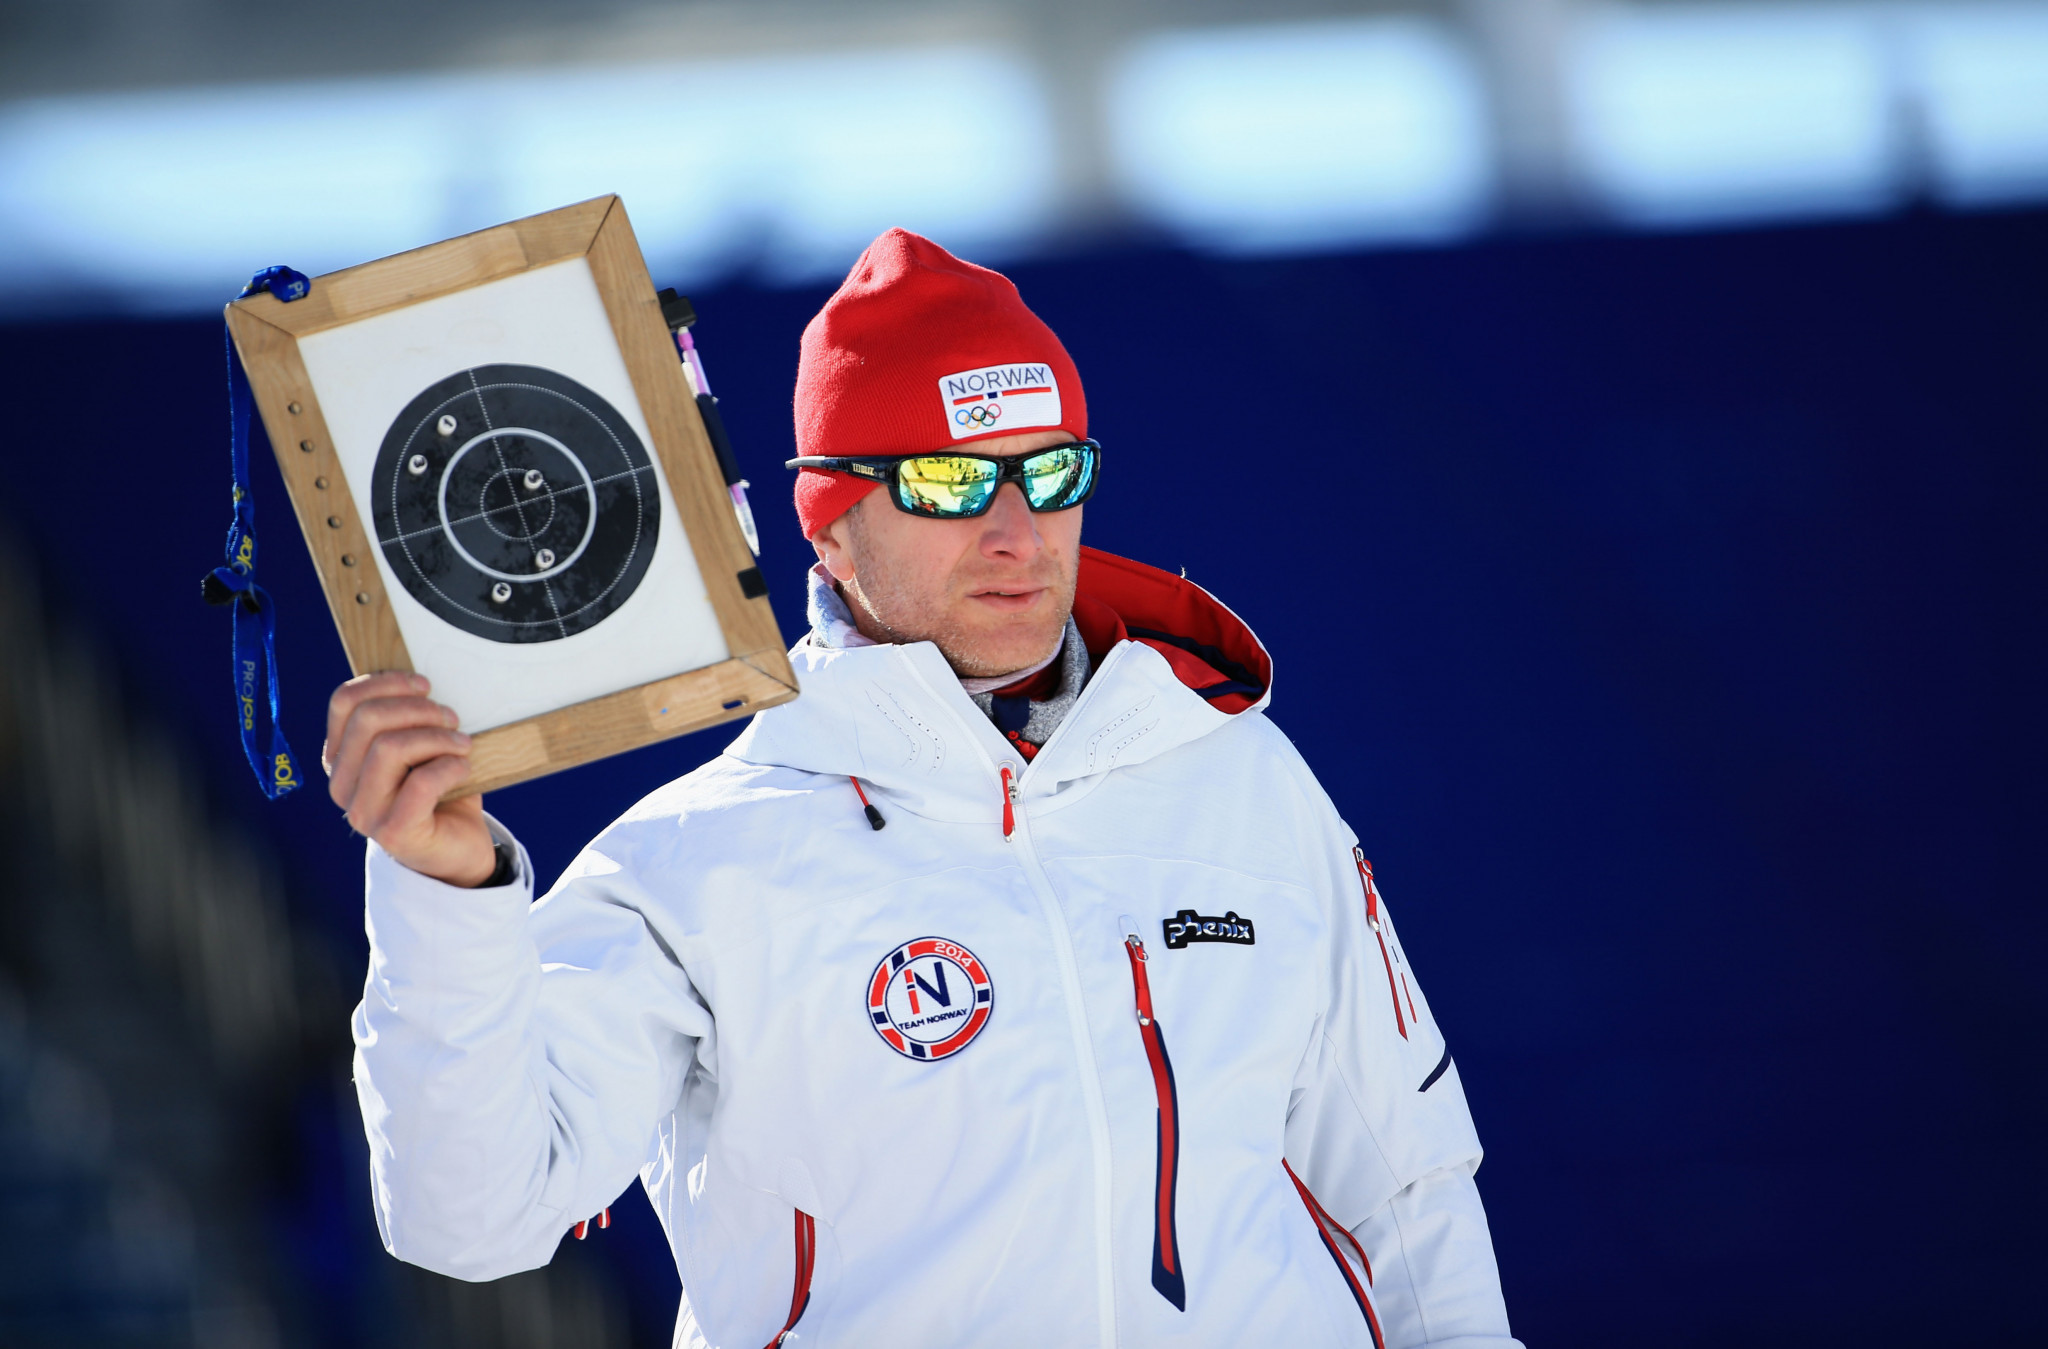 Norwegian Olympic gold medallist Gjelland appointed coach of Czech biathlon team